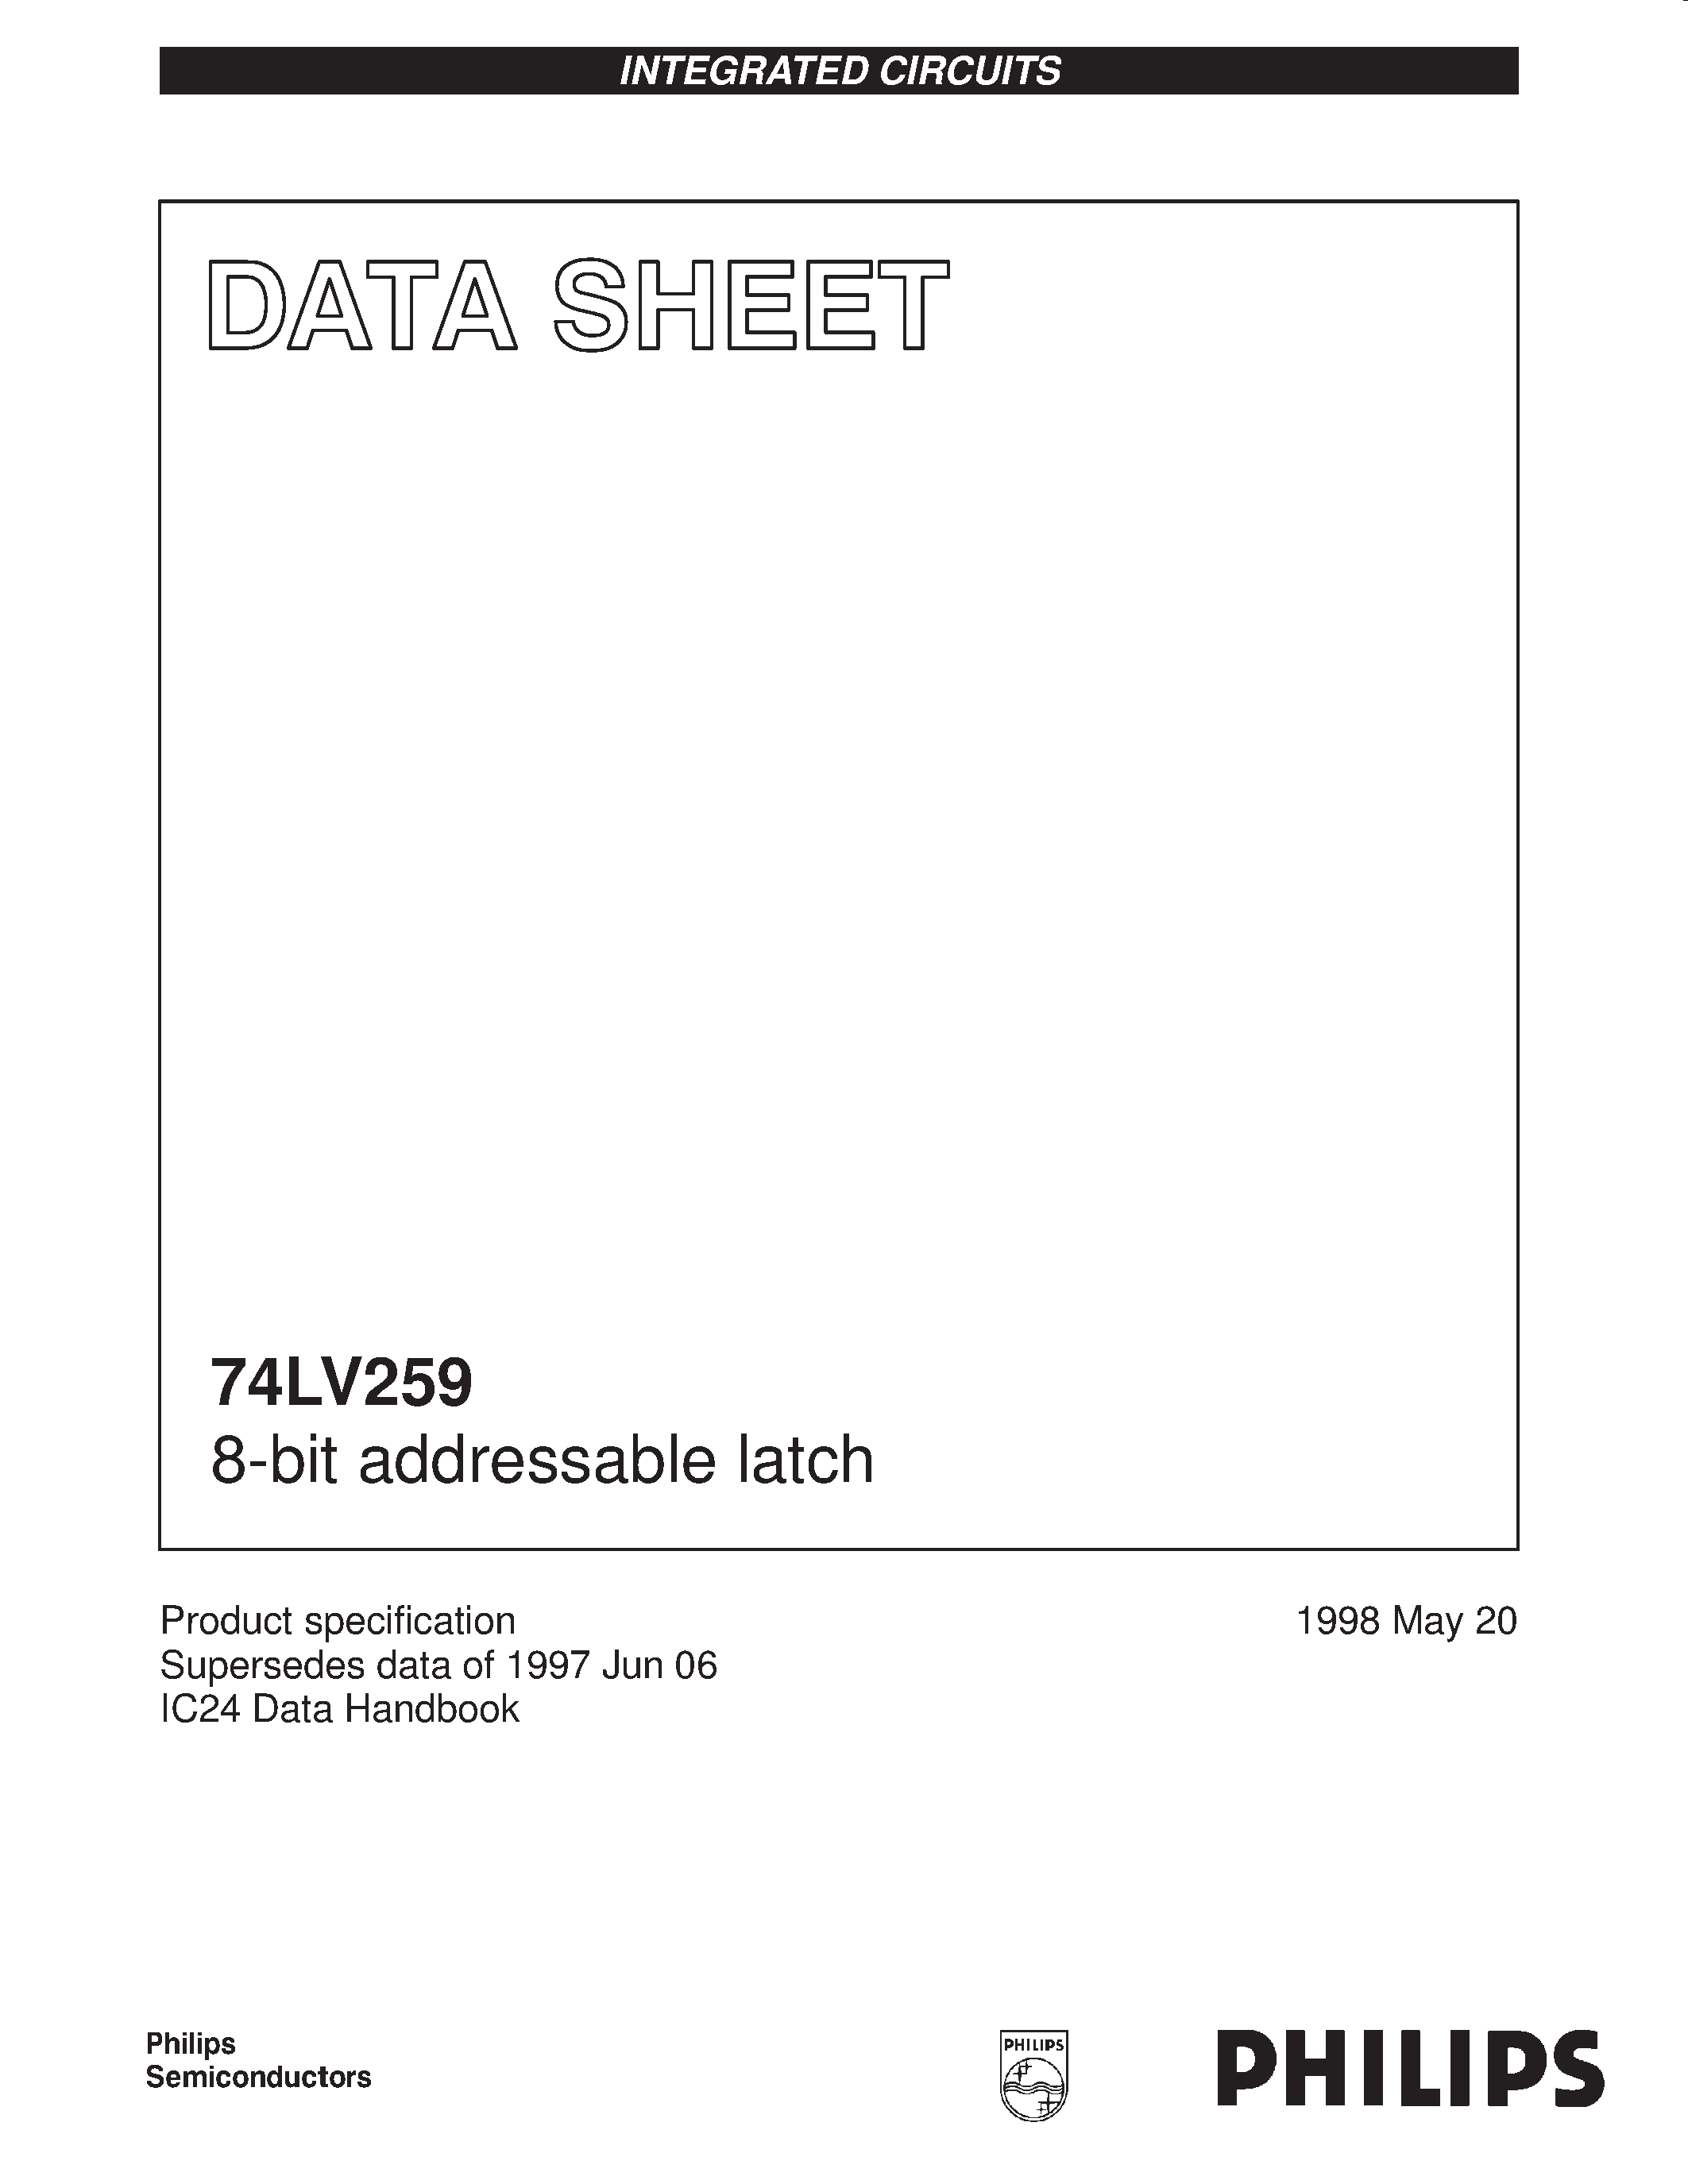 Datasheet 74LV259 - 8-bit addressable latch page 1